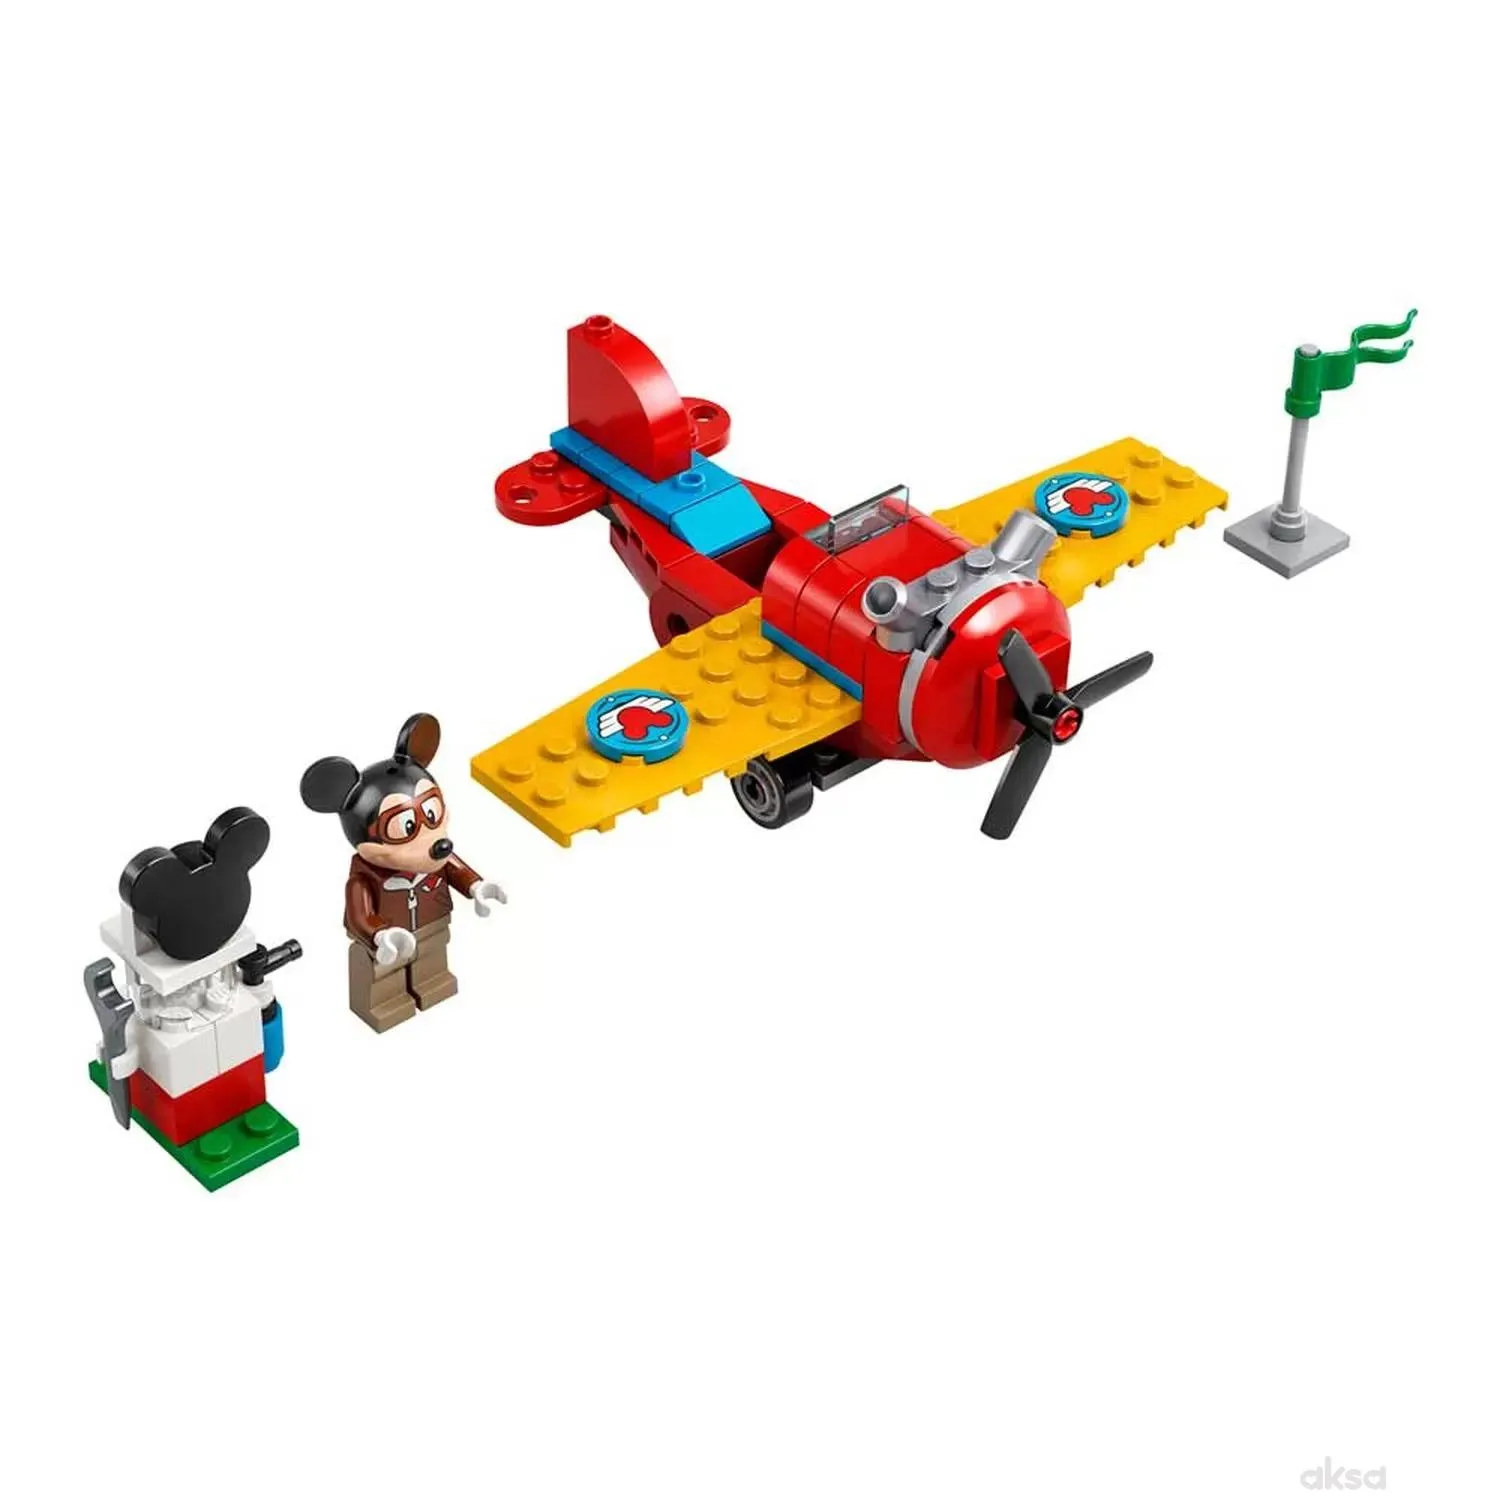 Lego Mickey Mouse Avion sa propelerom 